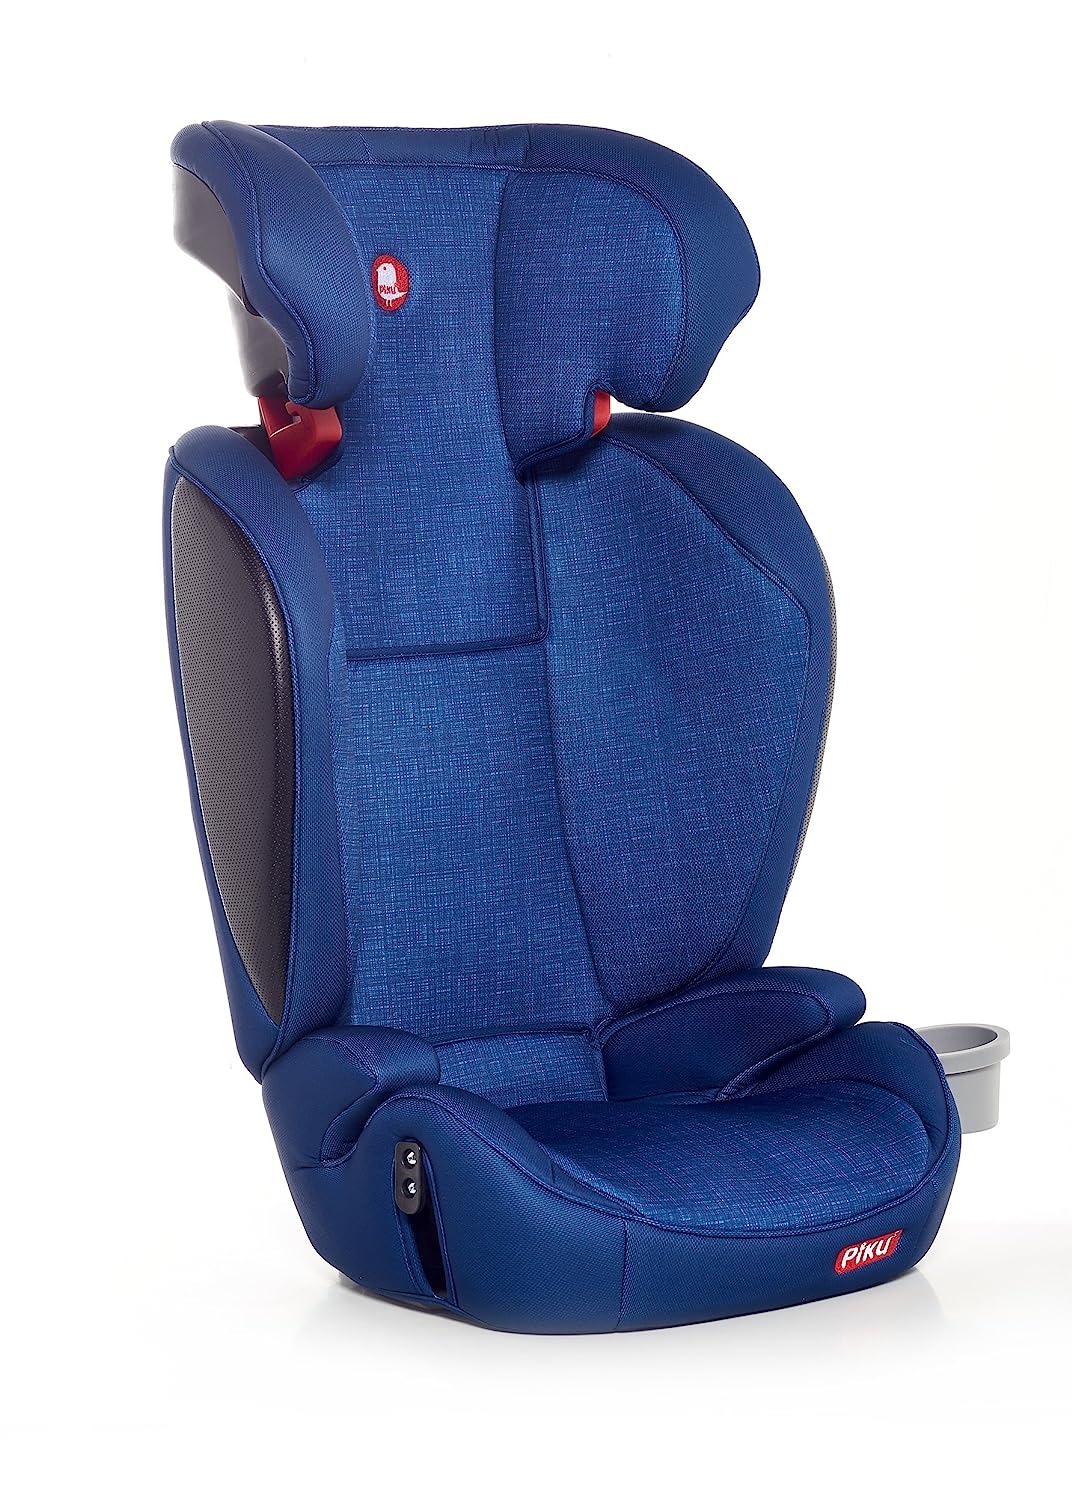 Piku Kliku Fix – Car Child Seat Group 2/3 (15 – 36 kg) for Age 3 – 12 Years with System Fix, Blue)